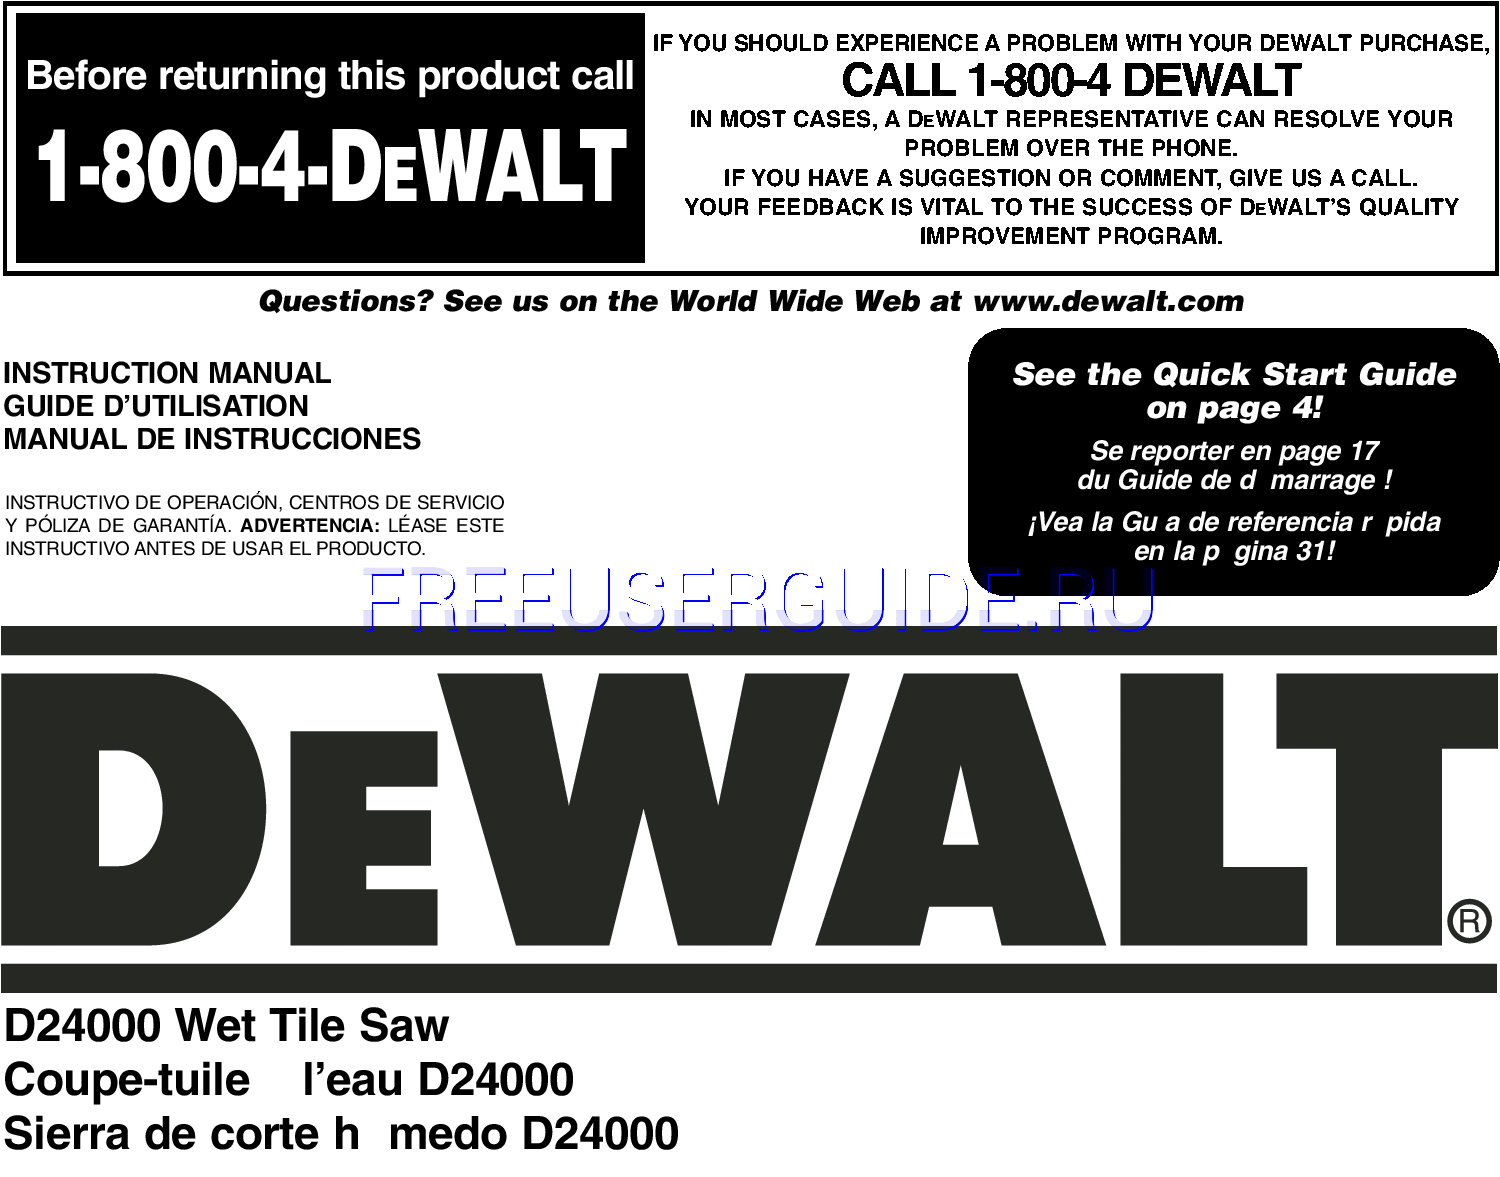 Leer Online Manual De Instrucciones Para Dewalt D24000 - Dewalt Building Contractor's Licensing Exam Guide (1650x1275)